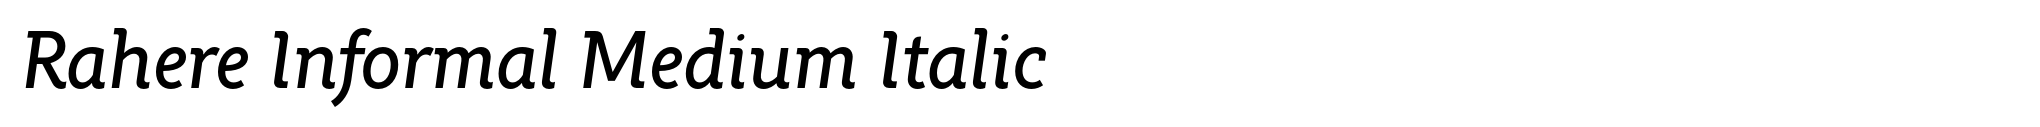 Rahere Informal Medium Italic image